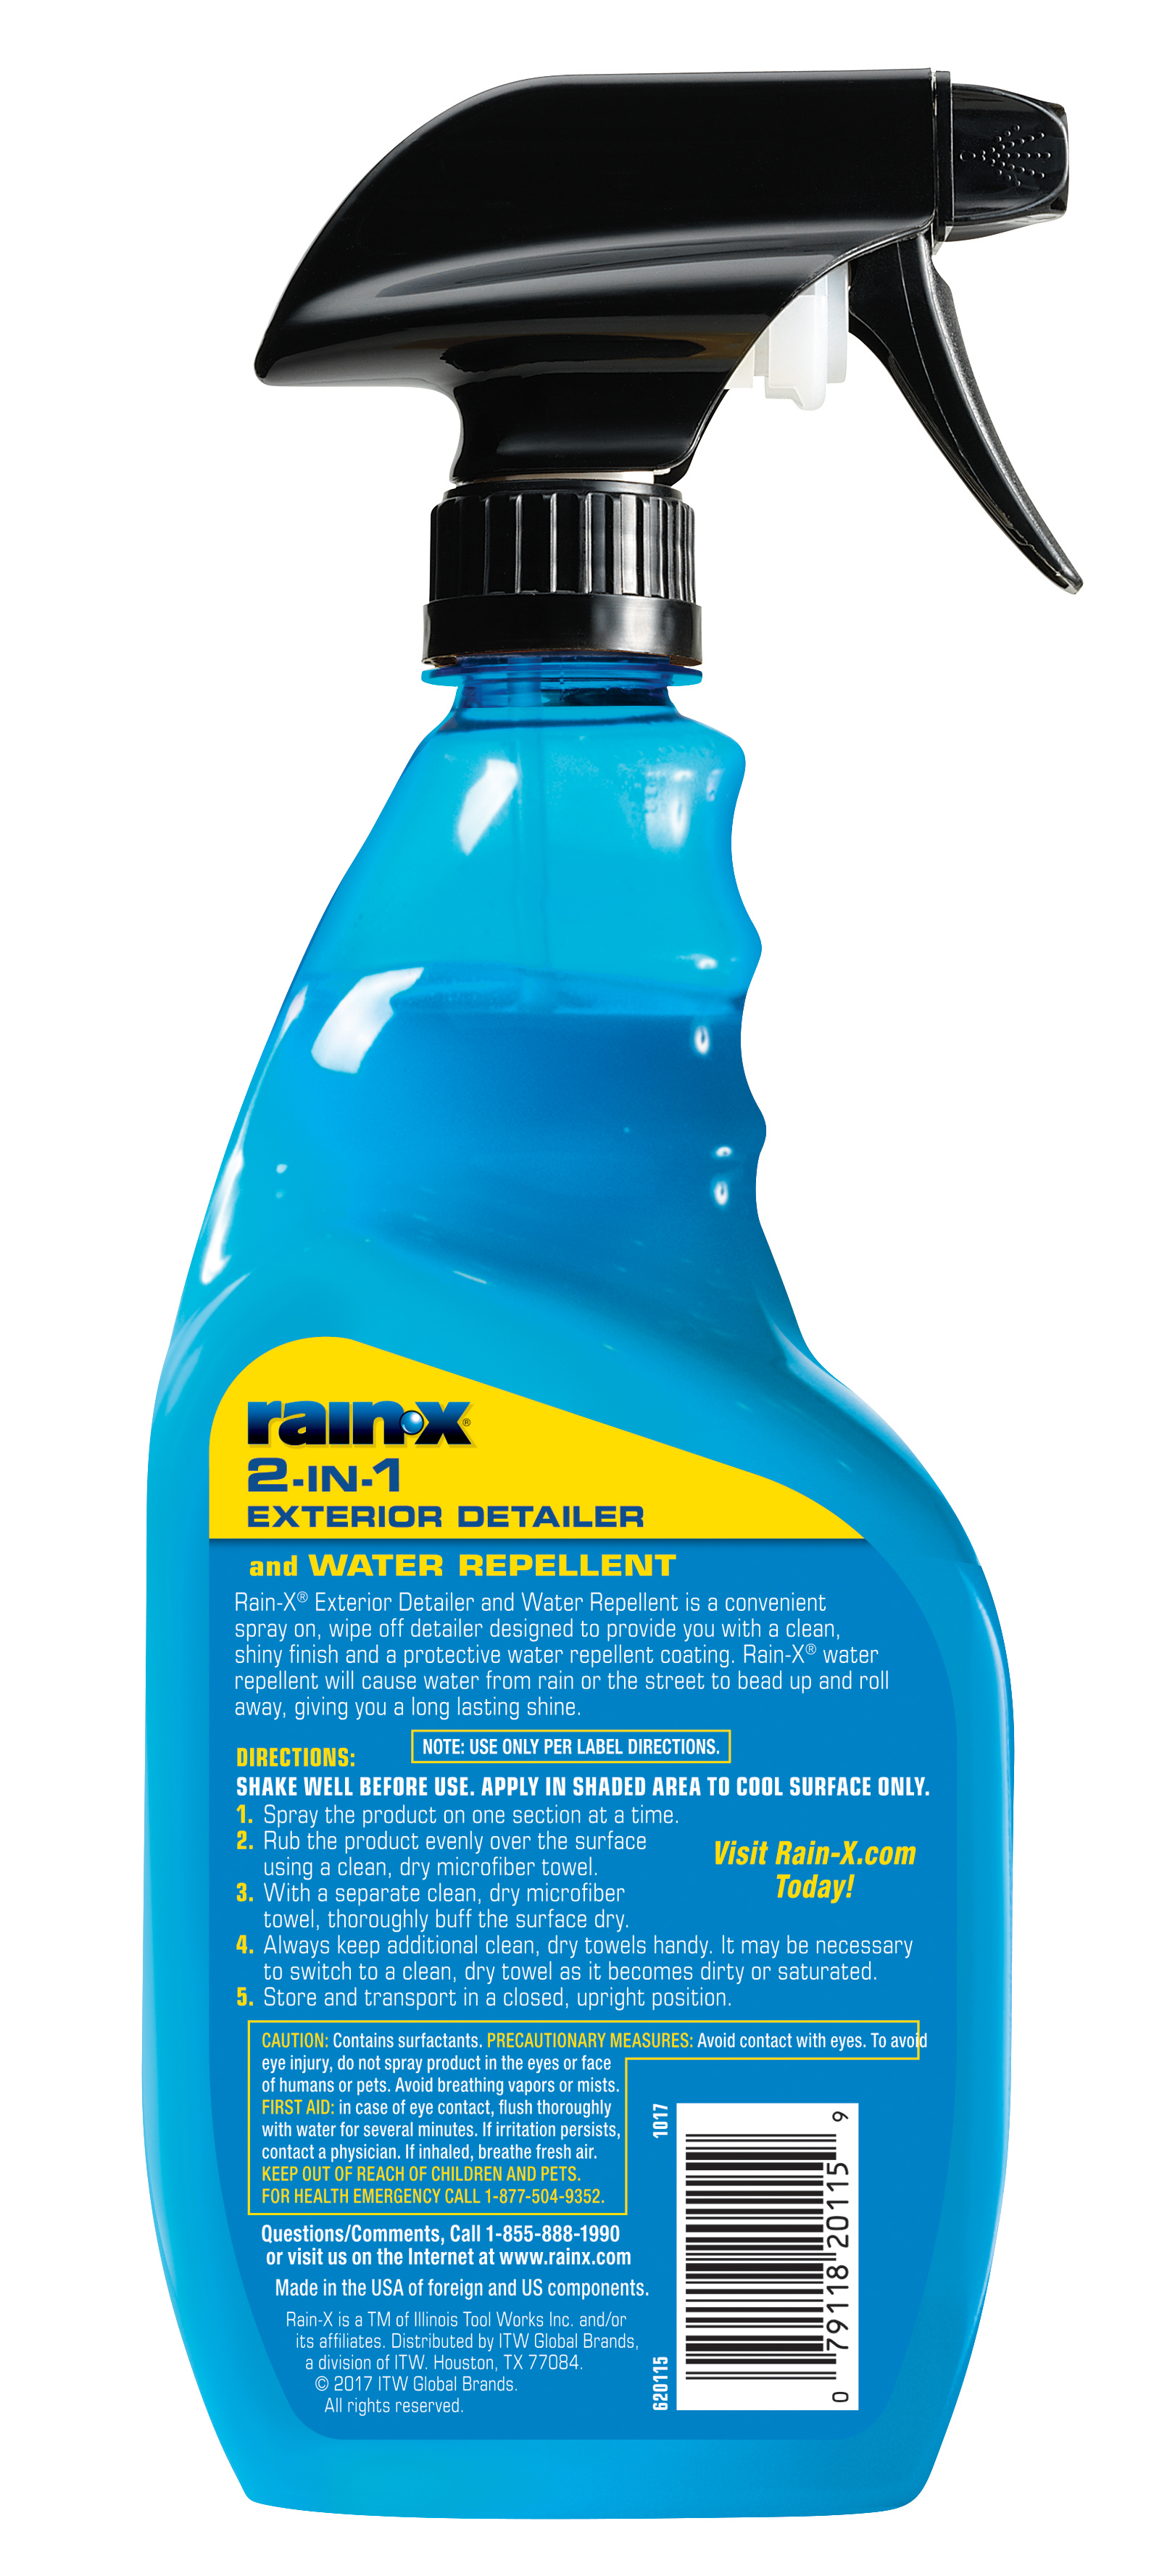 Rain-x 2-in-1 Exterior Detailer and Water Repellent 23 FL OZ - 620115 - image 3 of 5